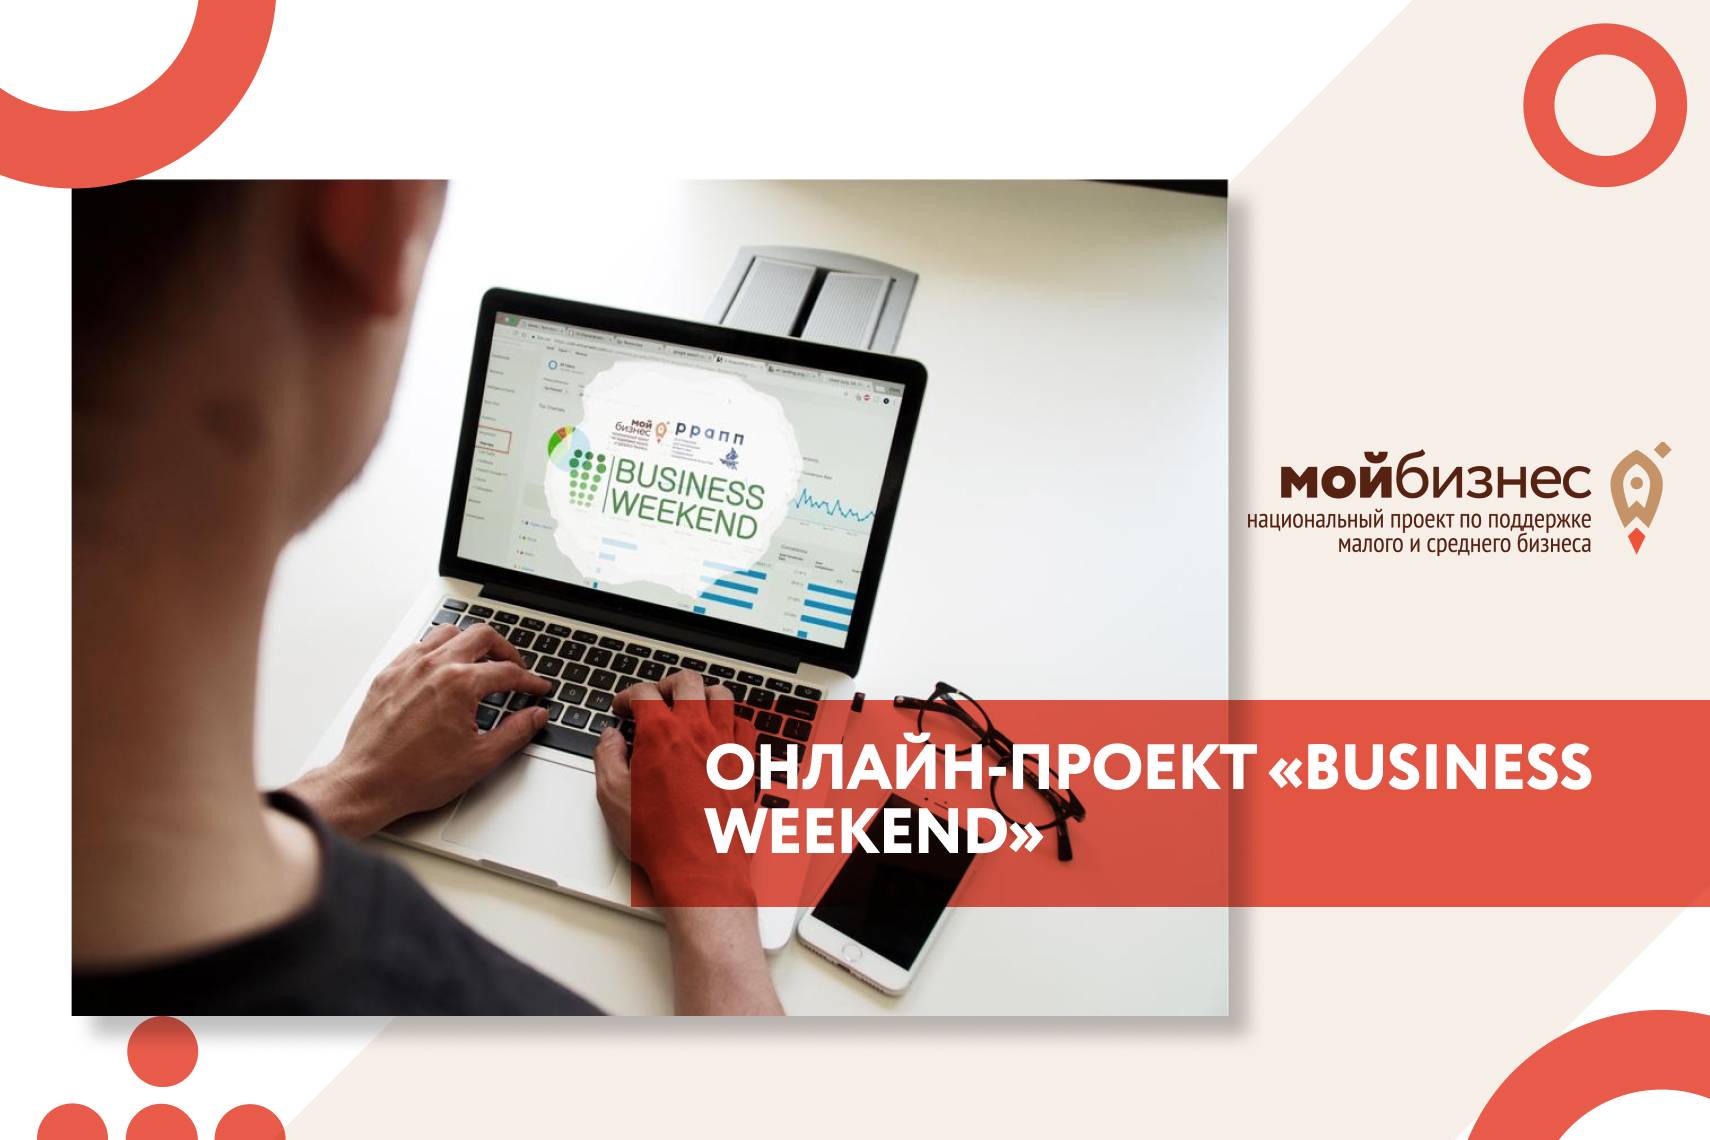 20 мая в Октябрьском районе стартует онлайн-проект «Business Weekend»